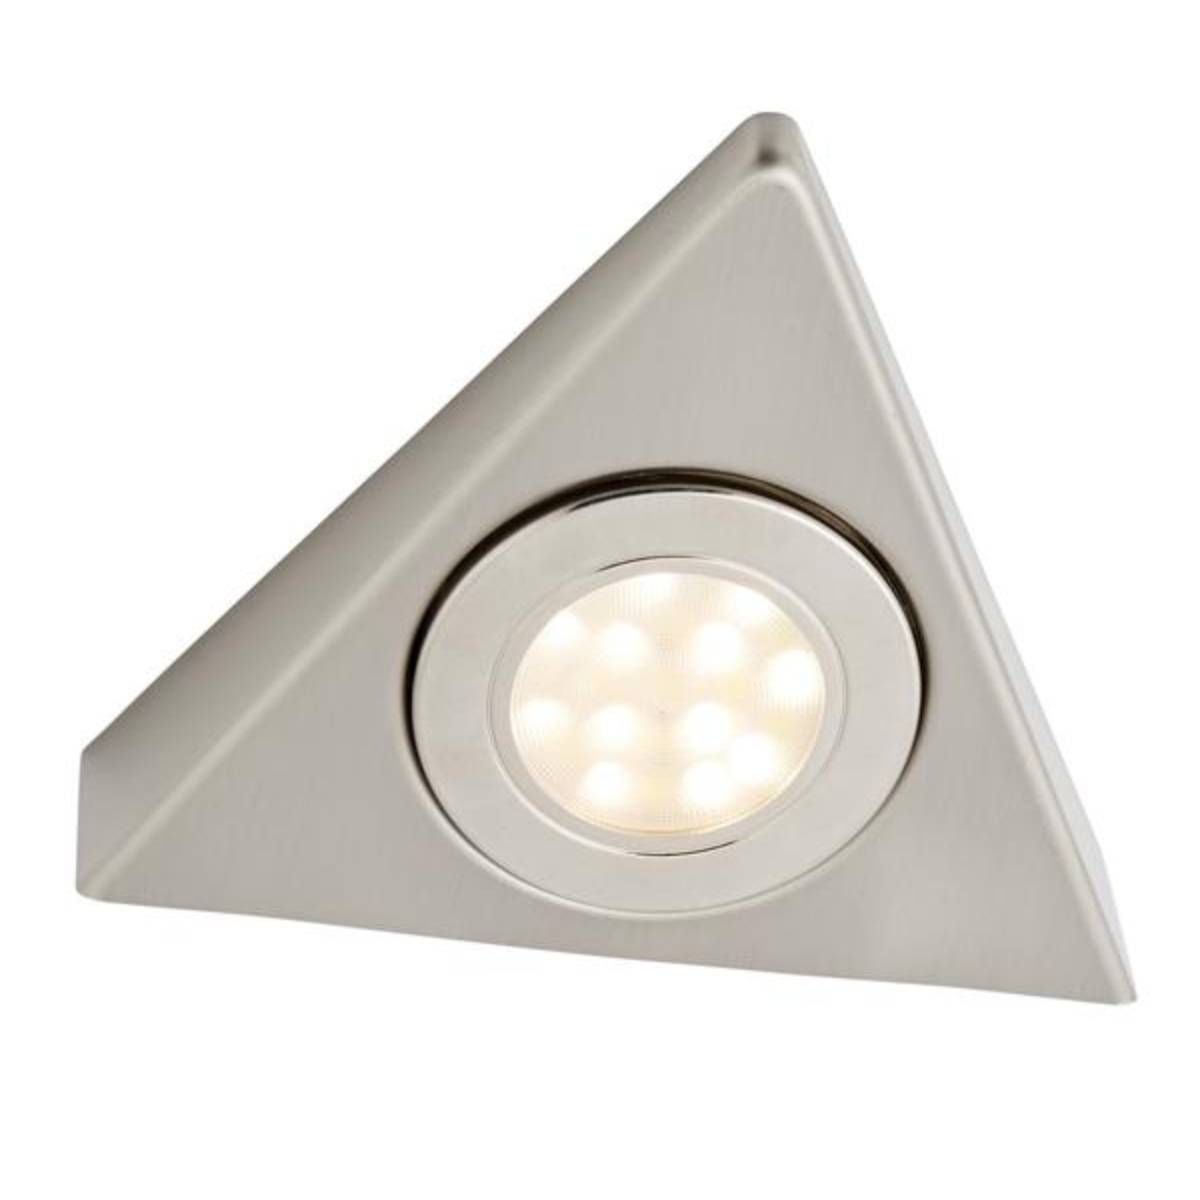 Forum Culina CUL-35861 Faro Triangular Under Cupboard LED Light - Satin Nickel (11937)